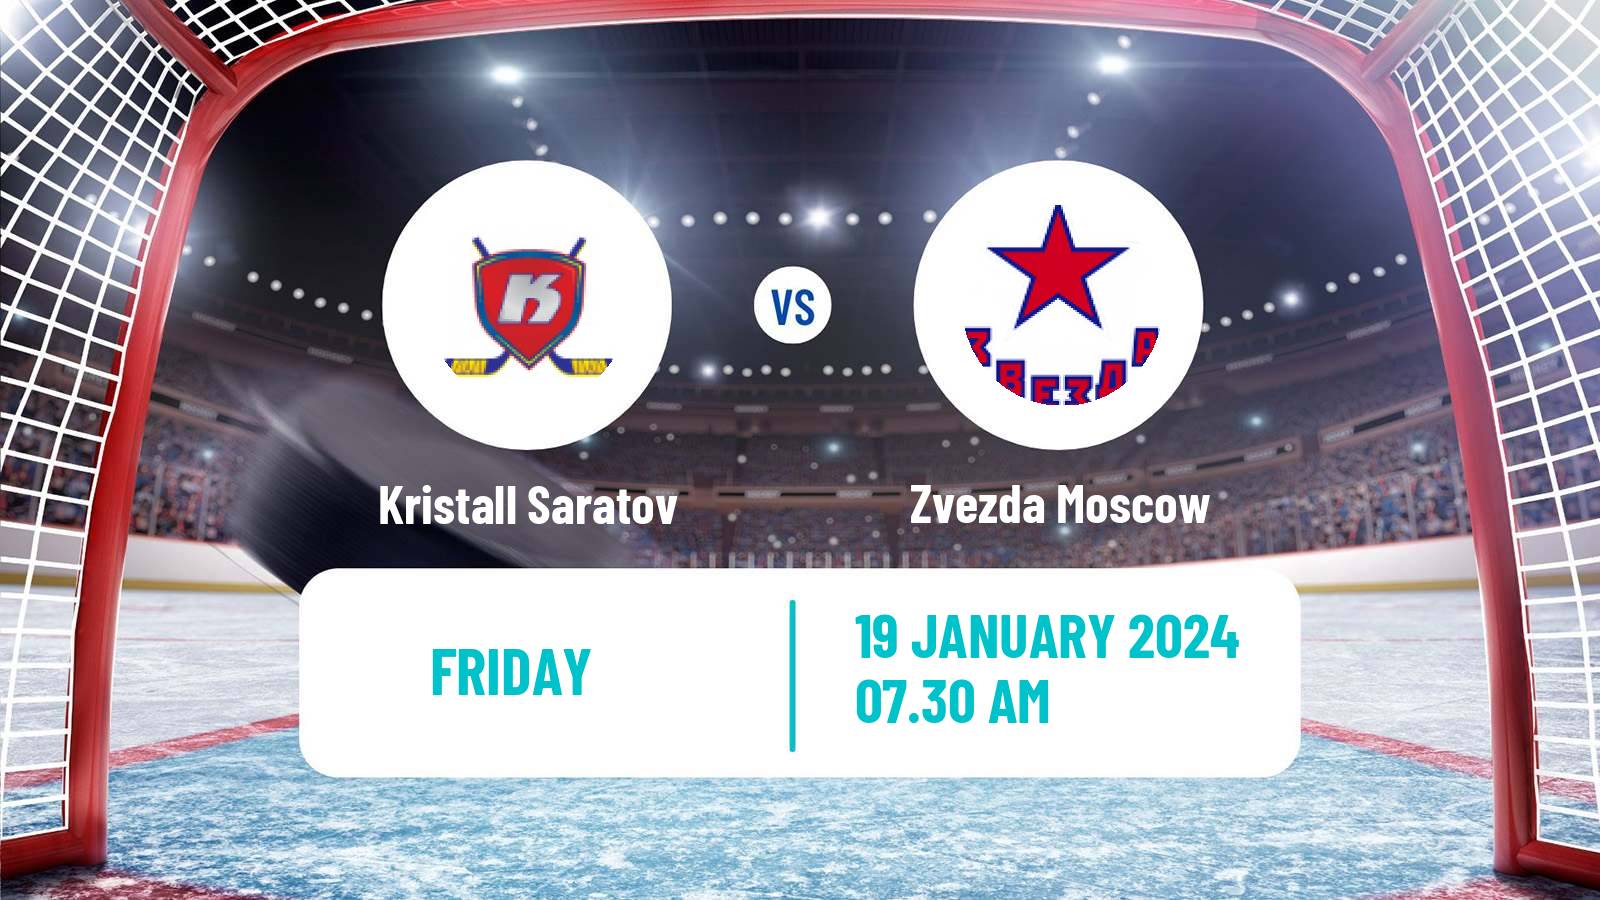 Hockey VHL Kristall Saratov - Zvezda Moscow